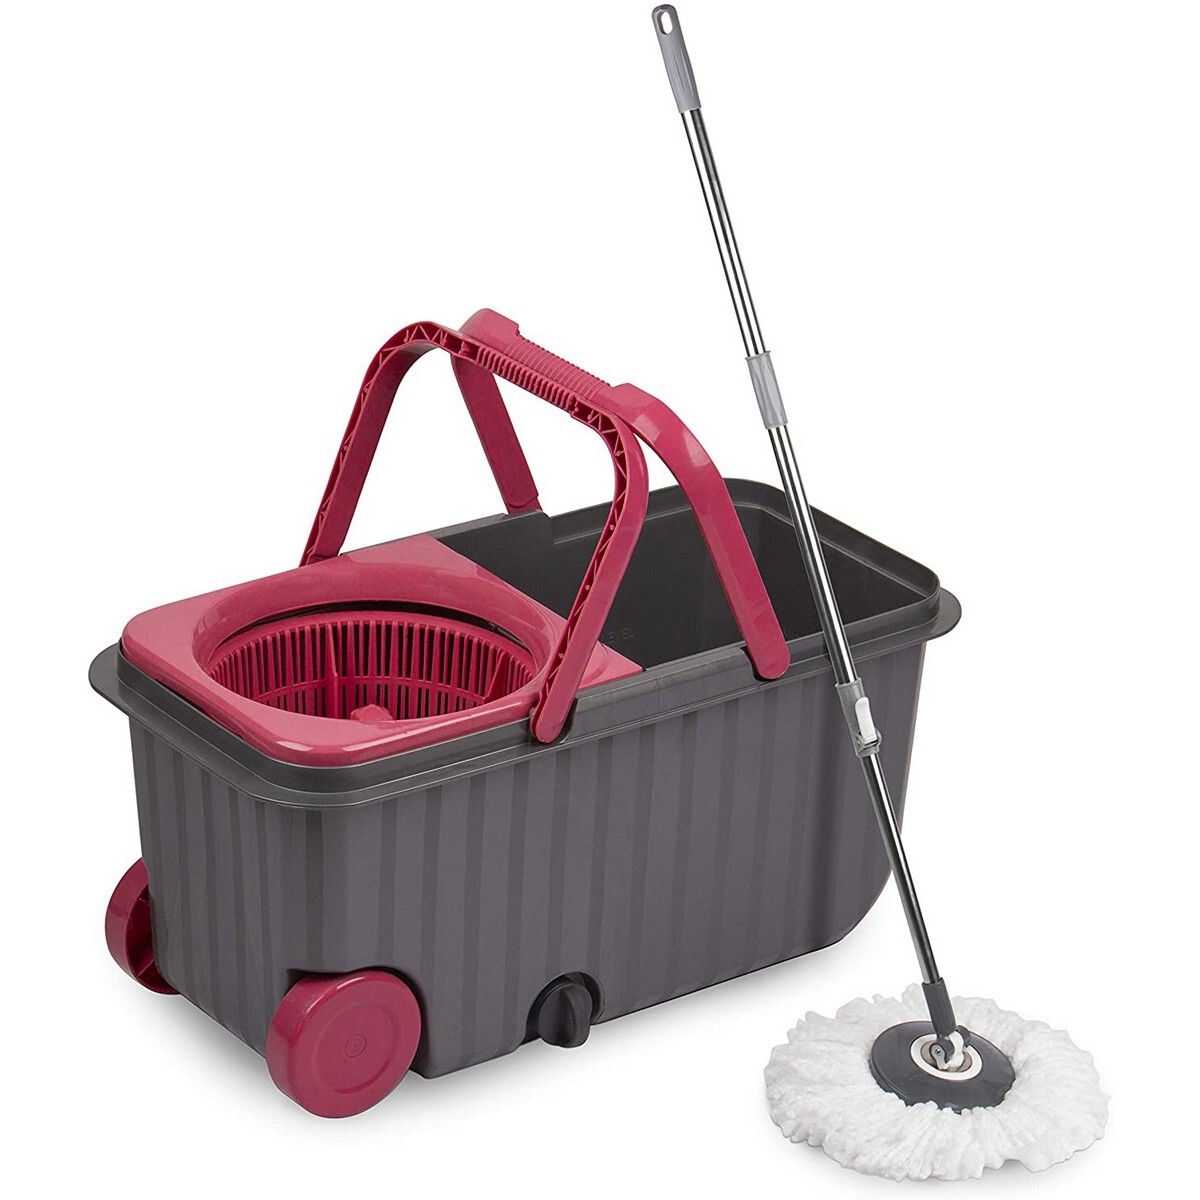 Polyset Magic Mop Bucket